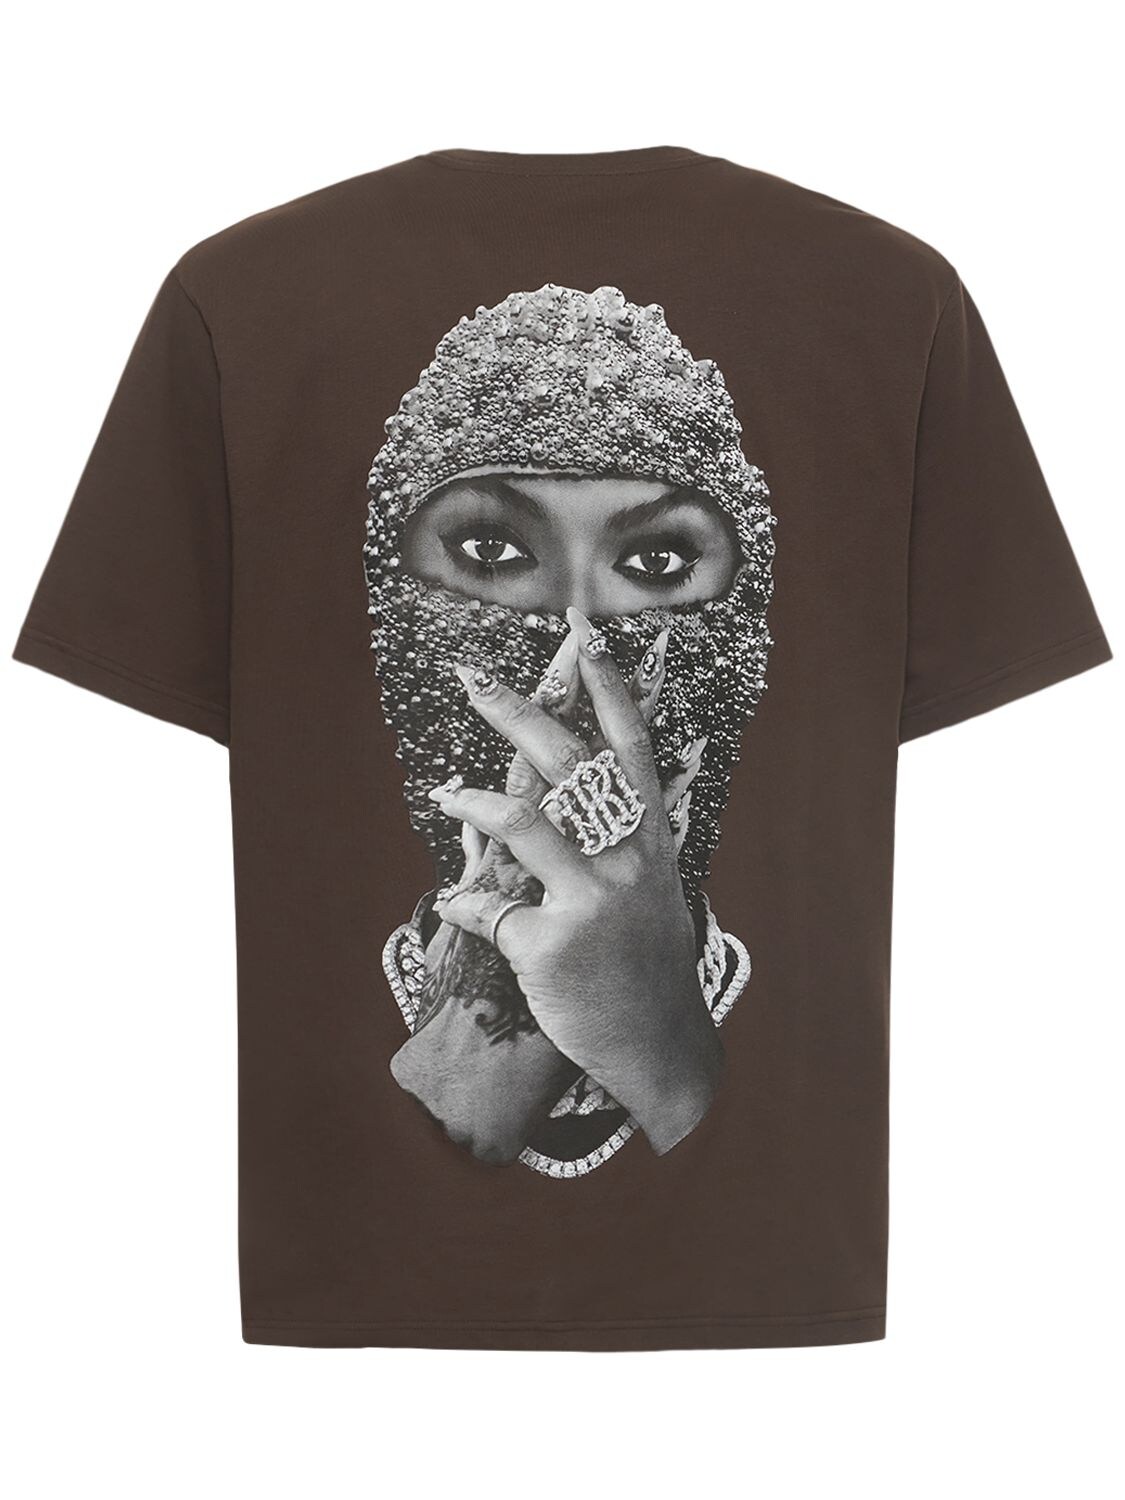 IH NOM UH NIT Rihanna Mask Printed Cotton T-shirt